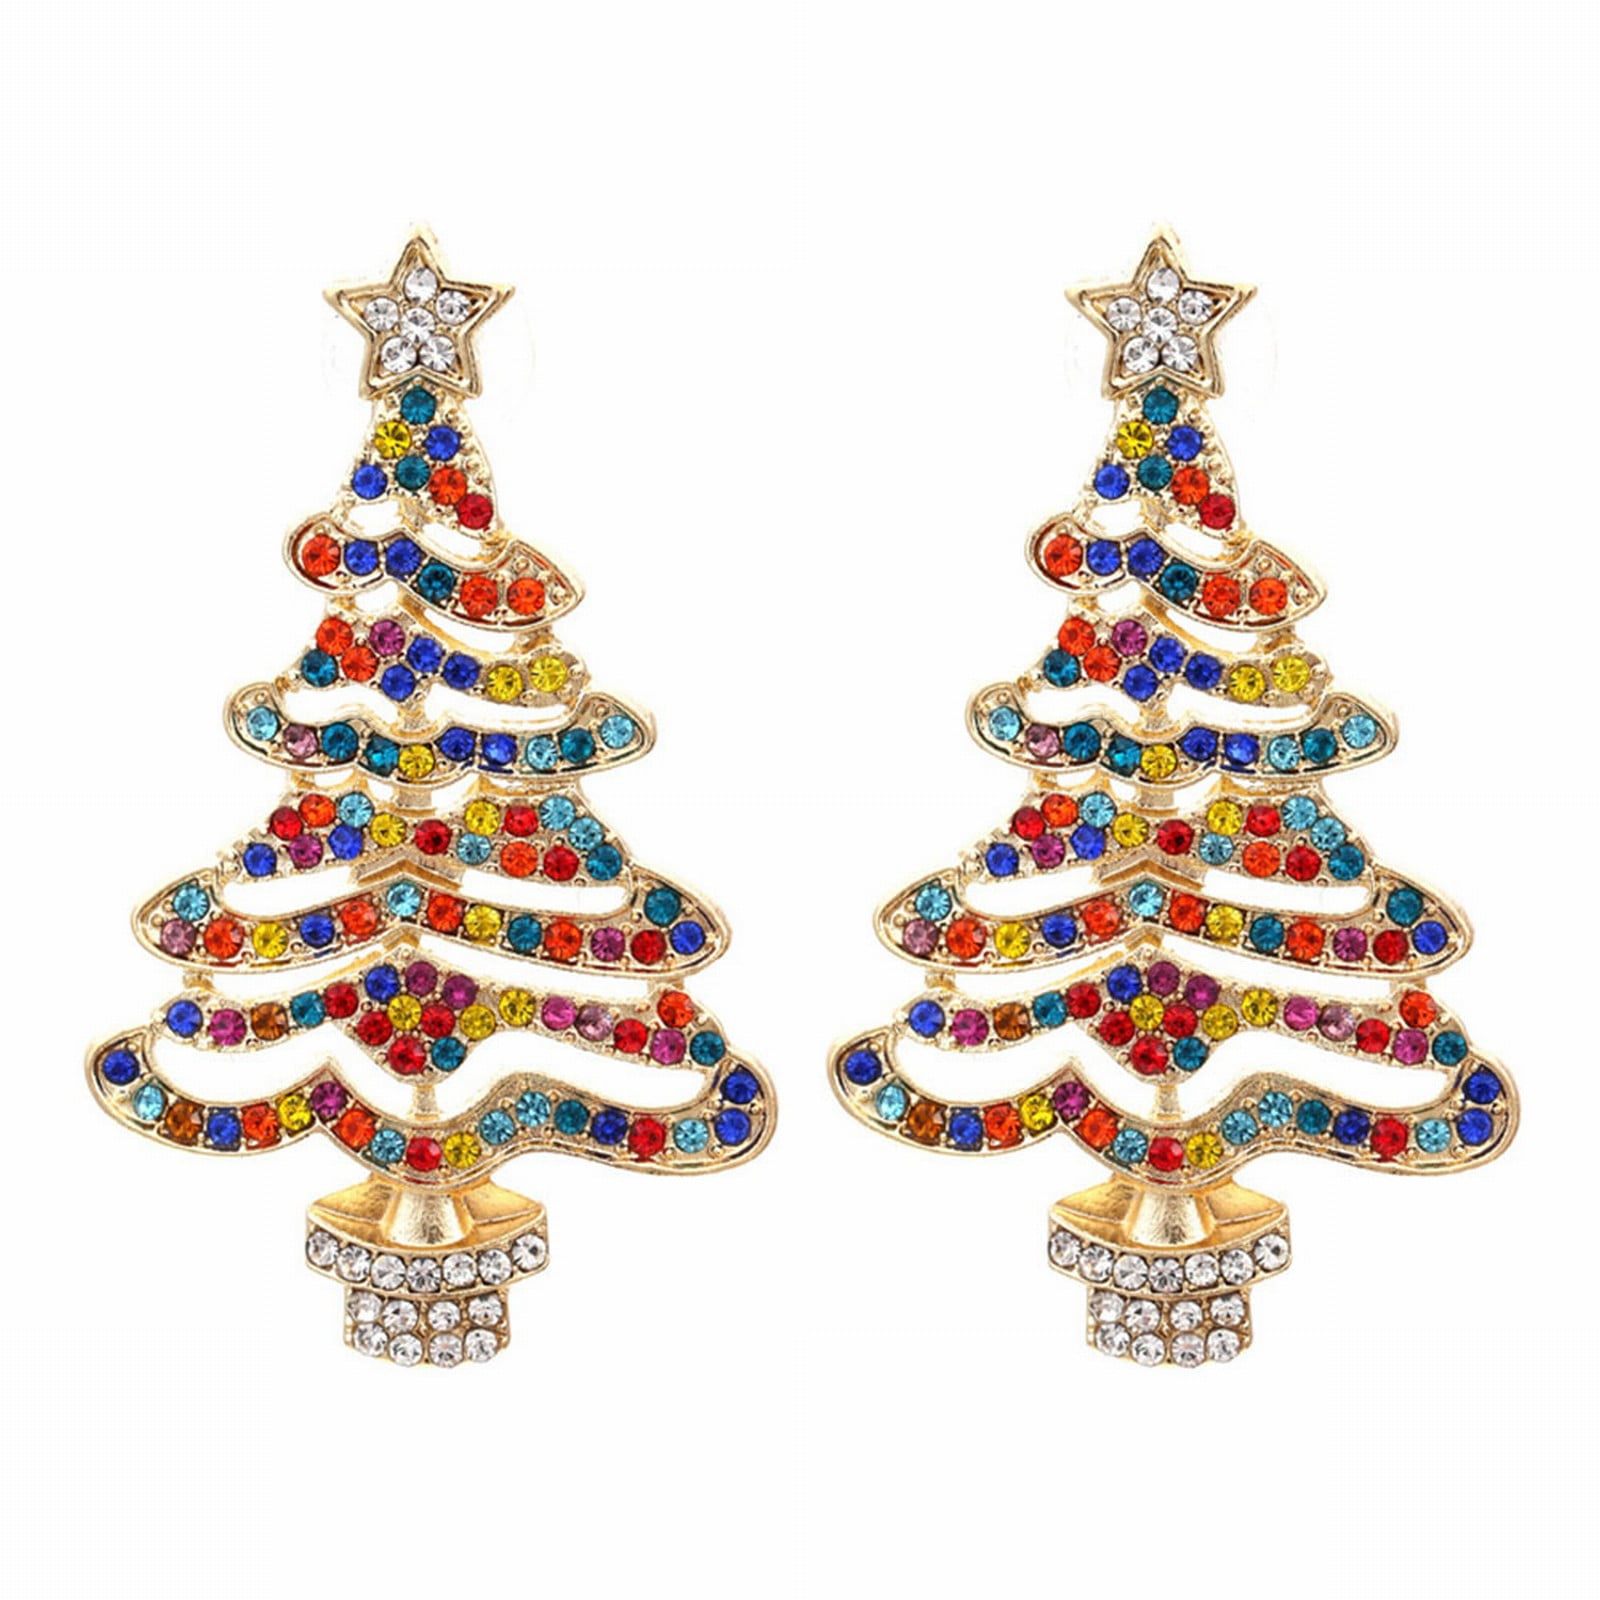 Micro Christmas Tree Earrings, Christmas Tree Light Earring